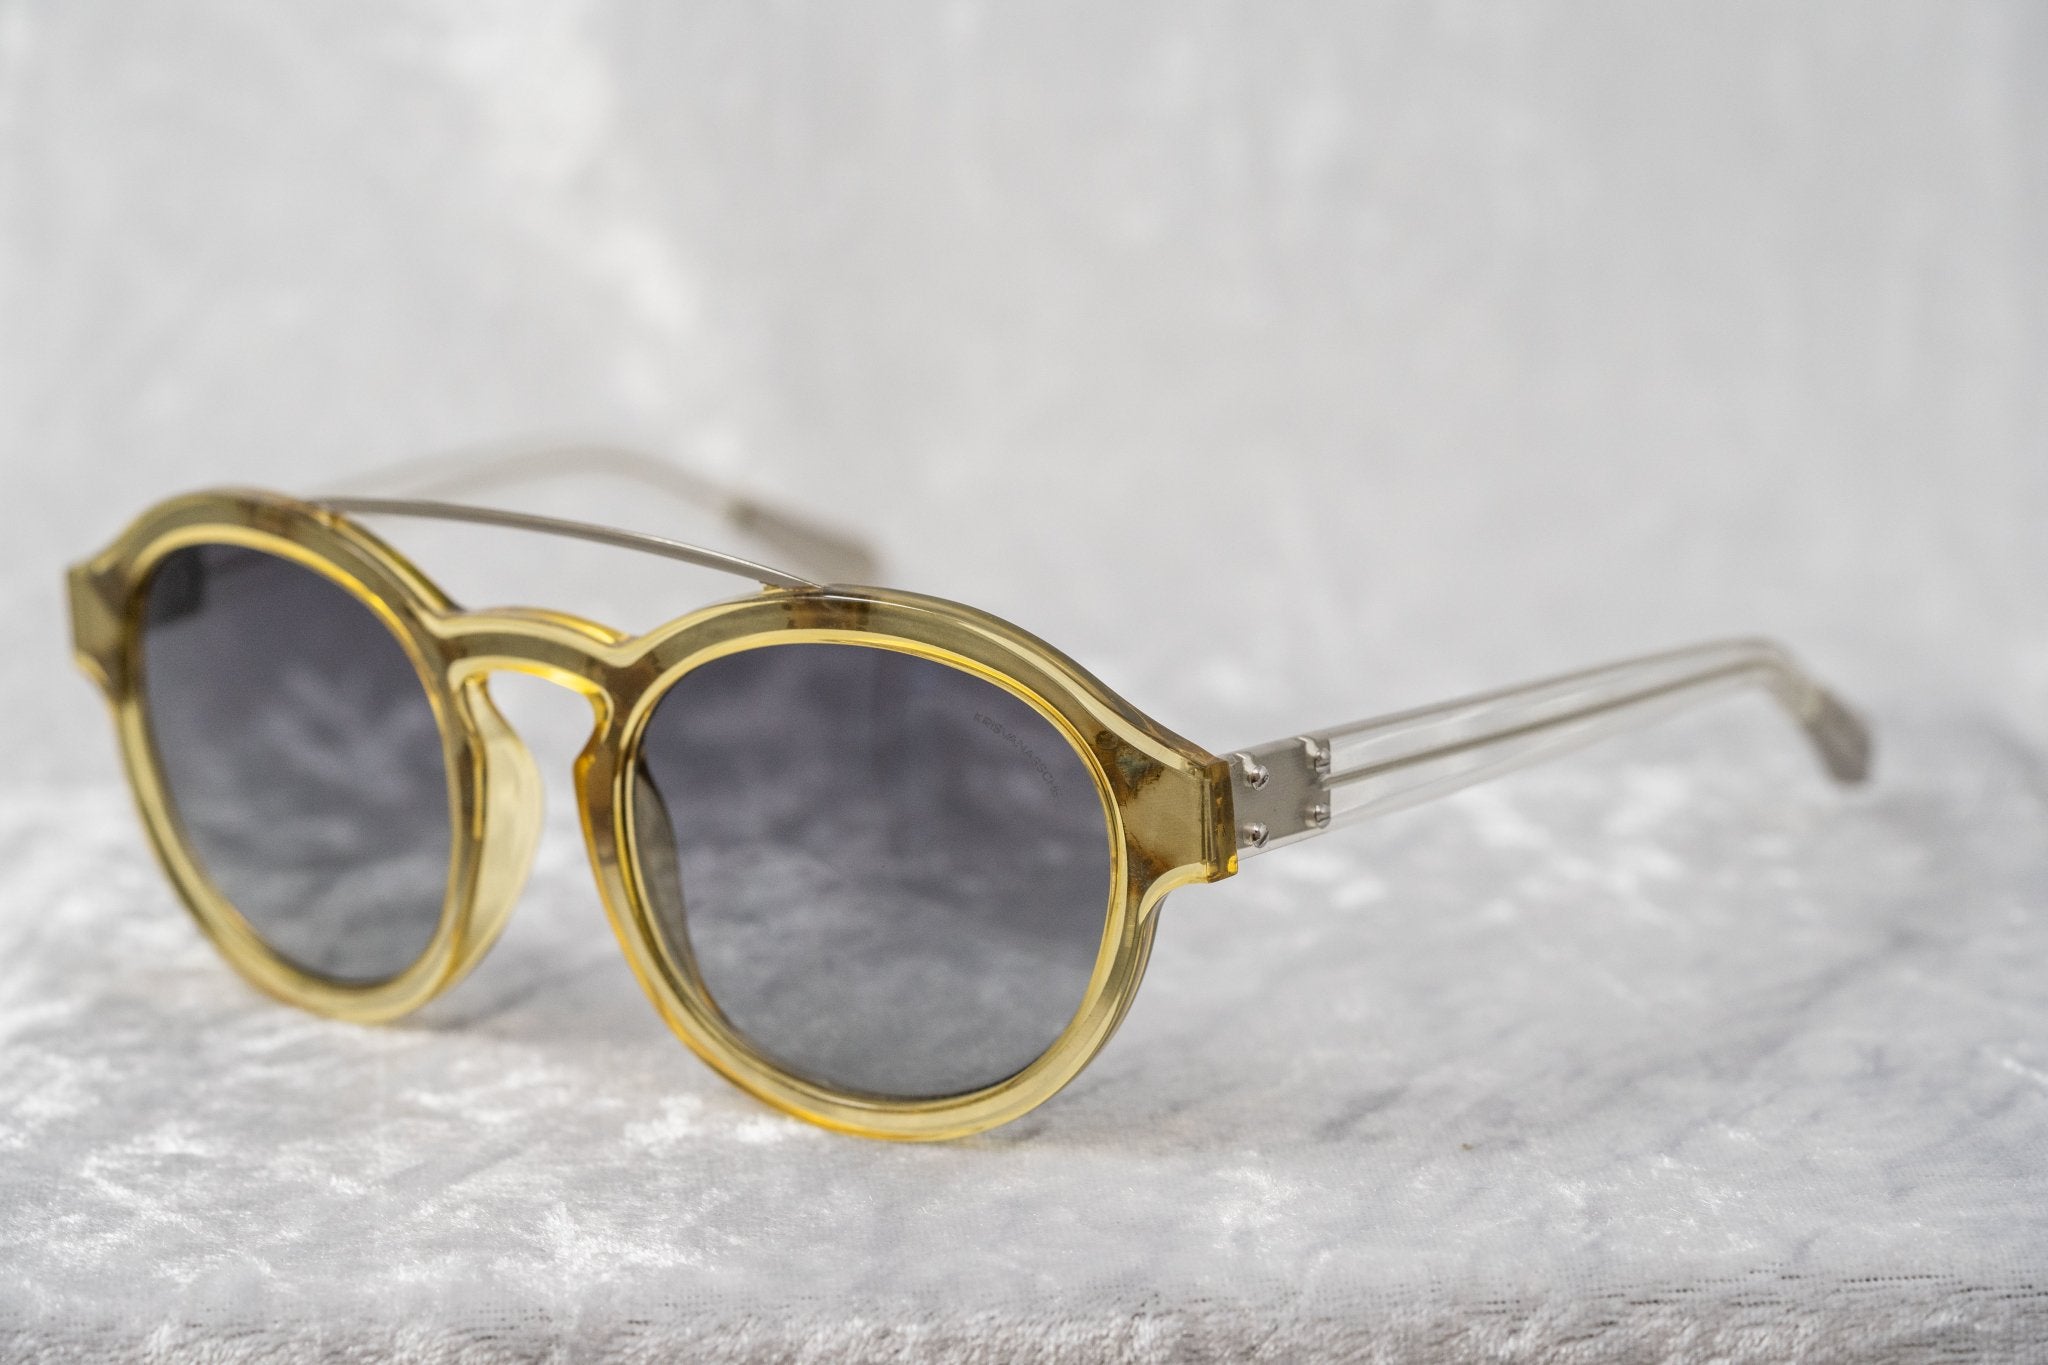 kris van assche sunglasses unisex with double bridge oval translucent yellow and grey graduated lenses kva11c4sun 812487 34af211e e56a 41d5 b98b cb0747af5803